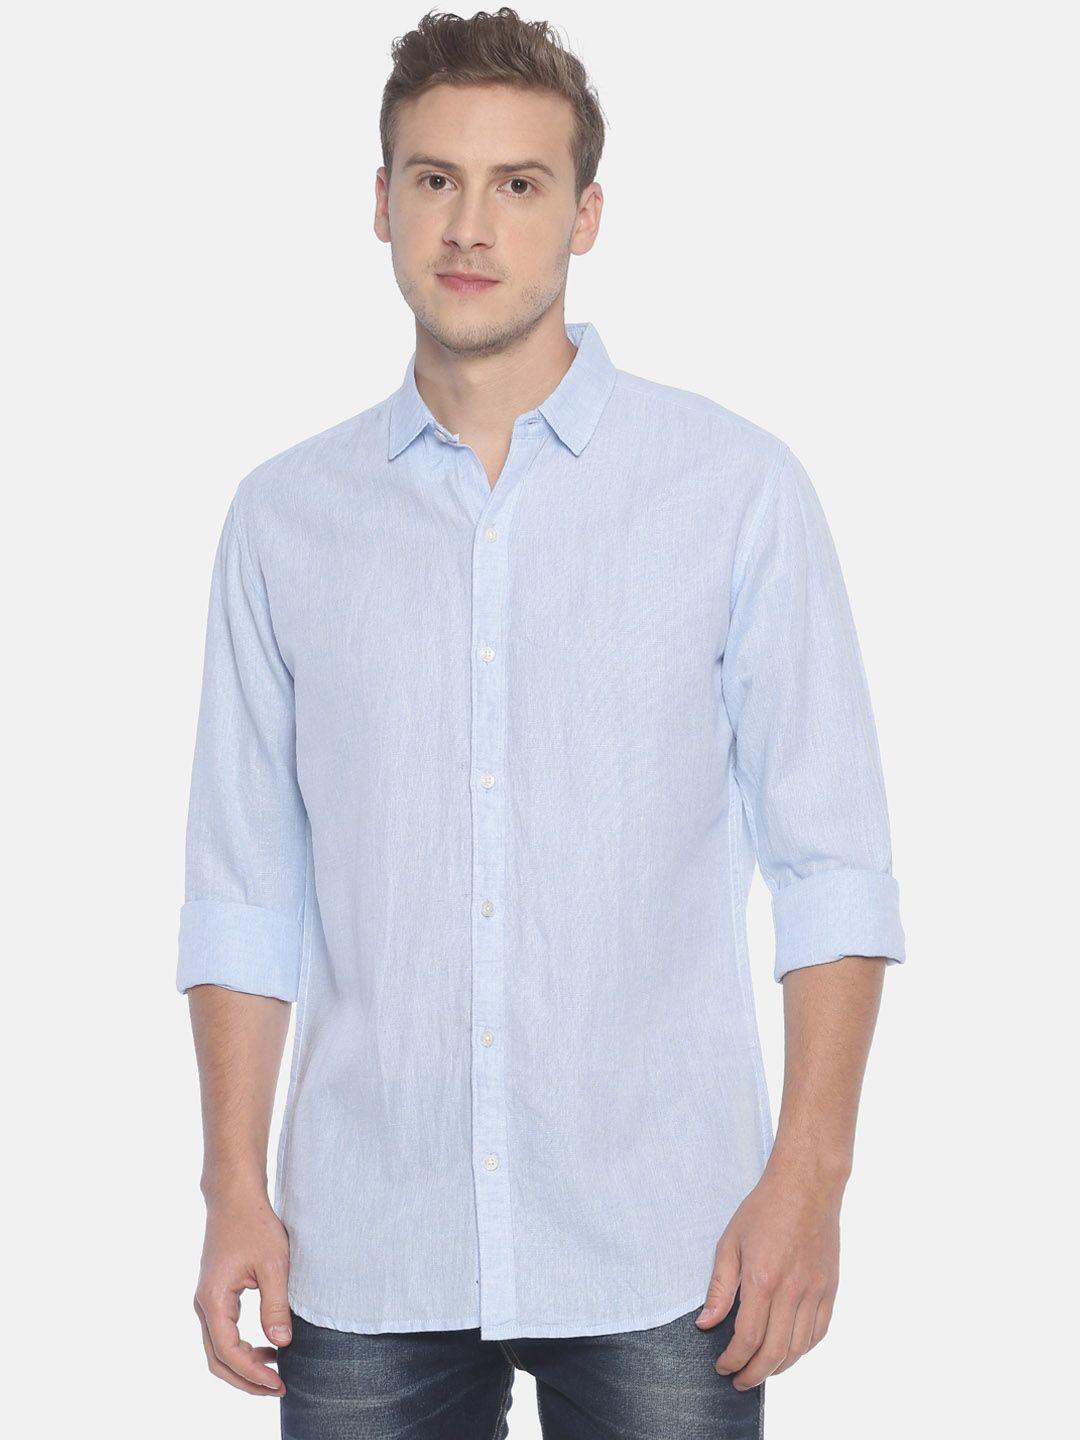 balista men blue standard slim fit solid cotton linen casual shirt